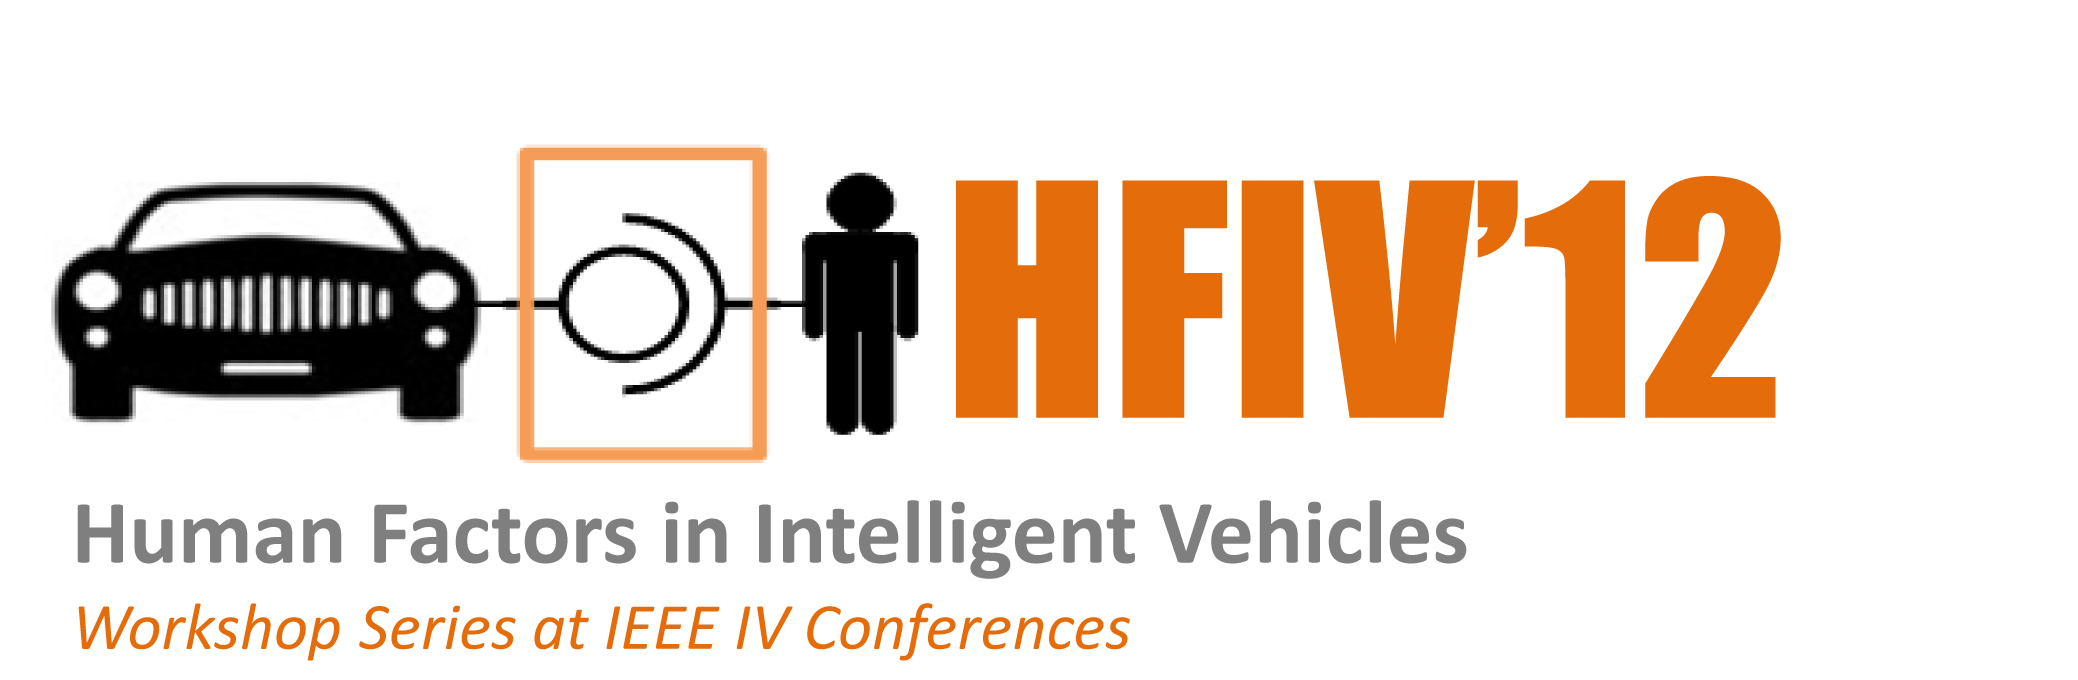 FHIV12 logo